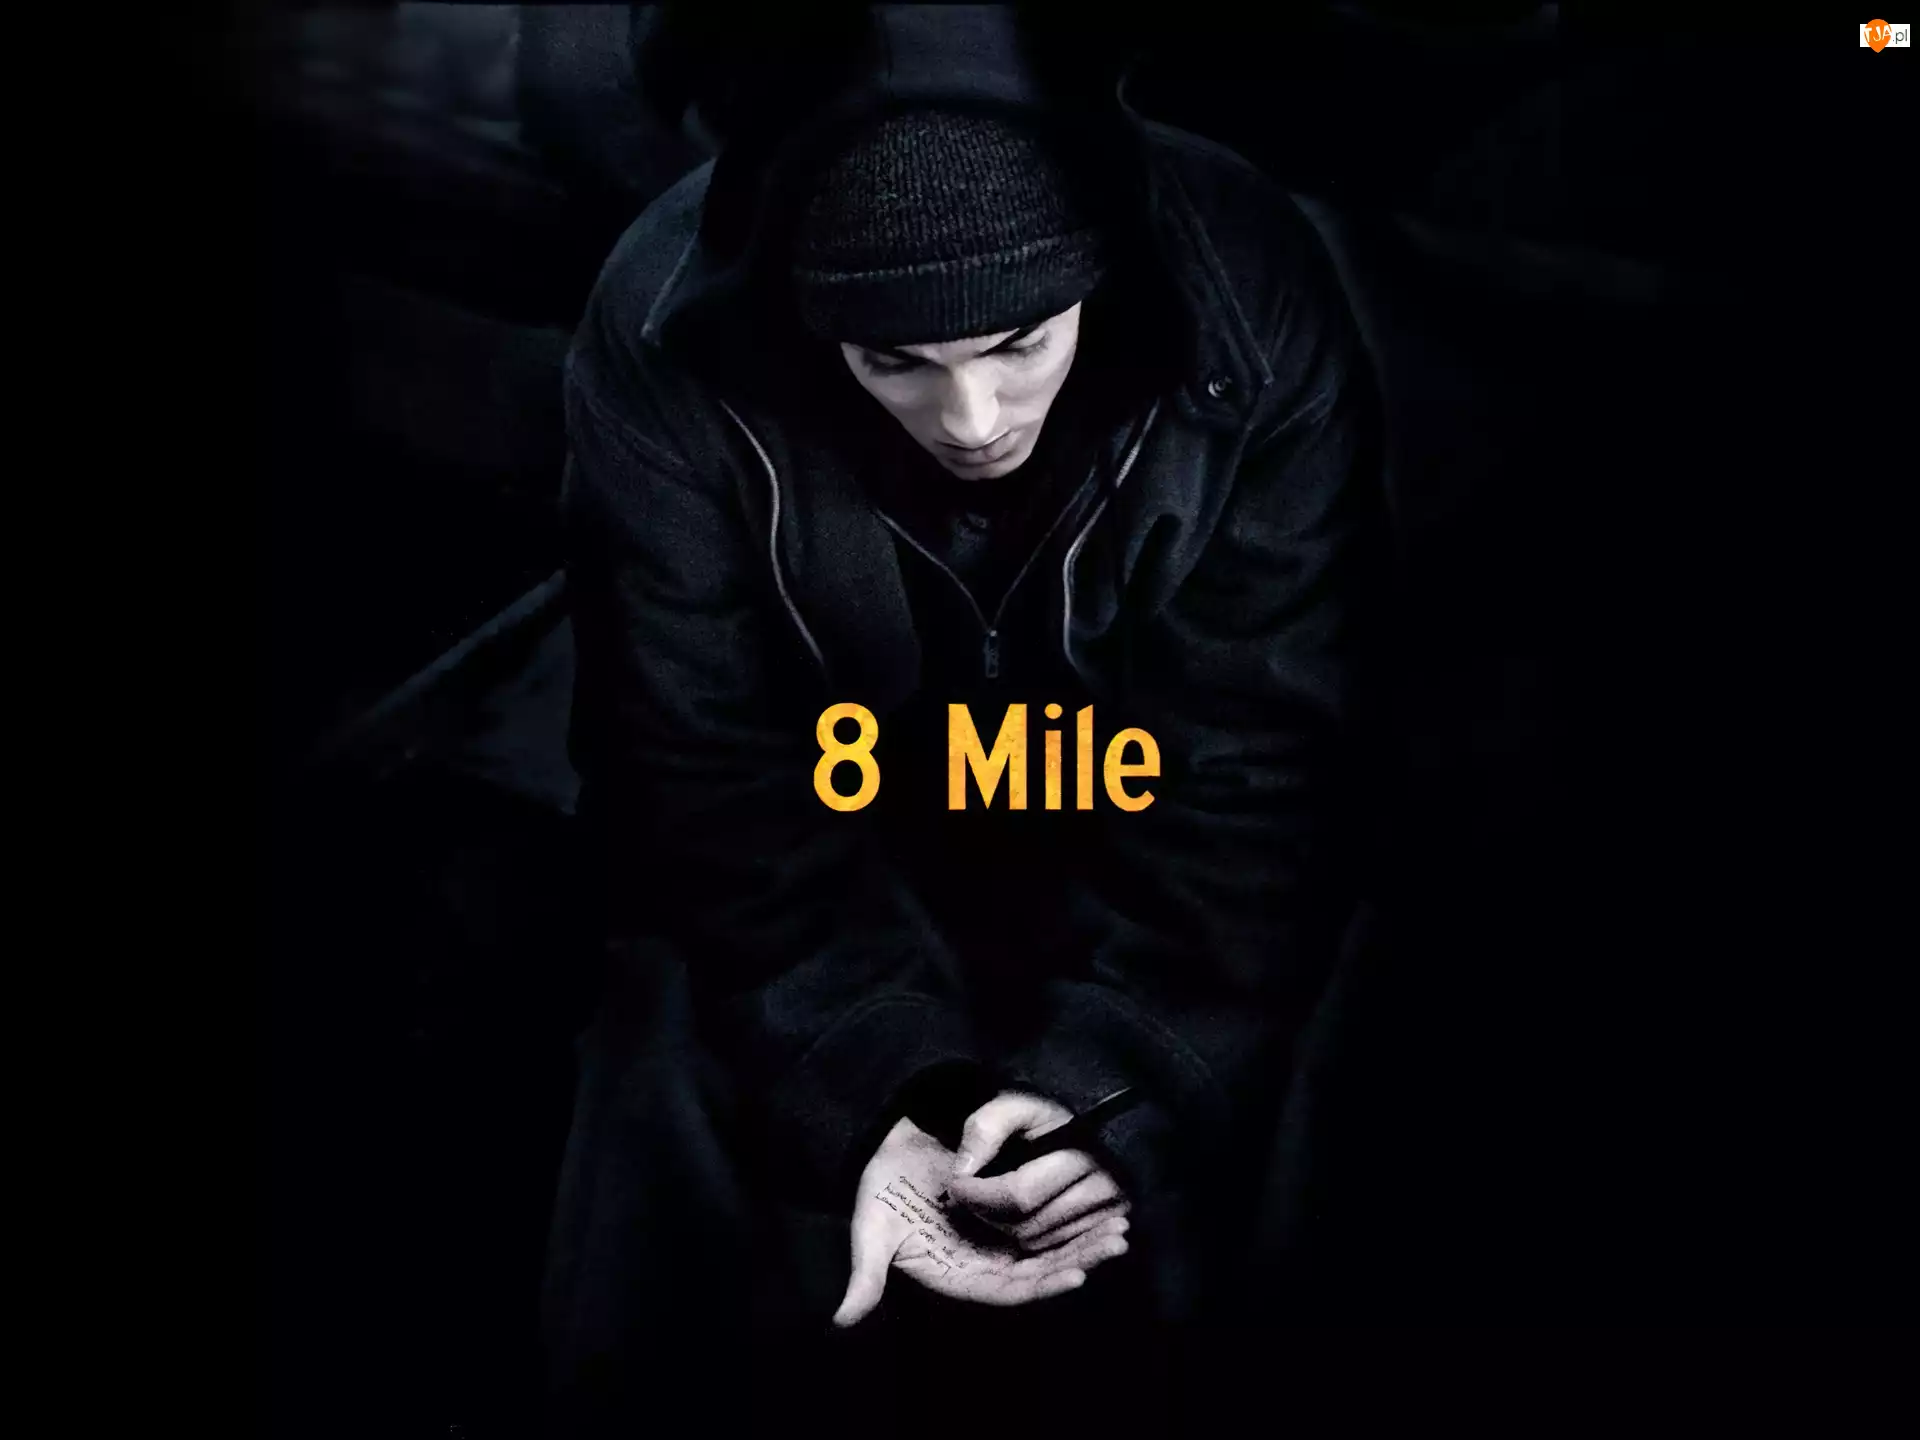 8 Mile, Eminem